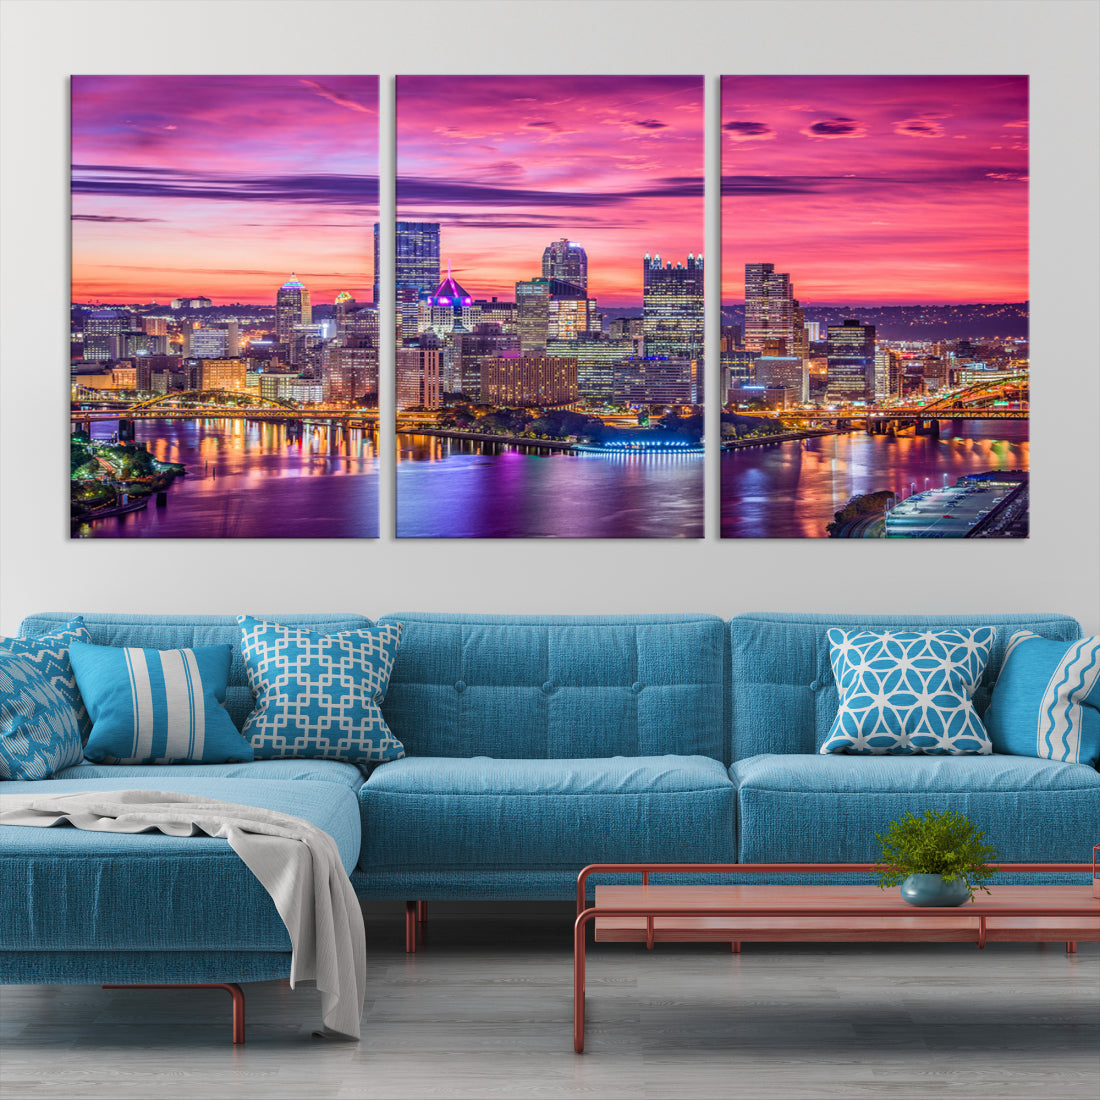 Pittsburgh Skyline Wall Art pink sky sunset cityscape Canvas Print Pennsylvania wall decor